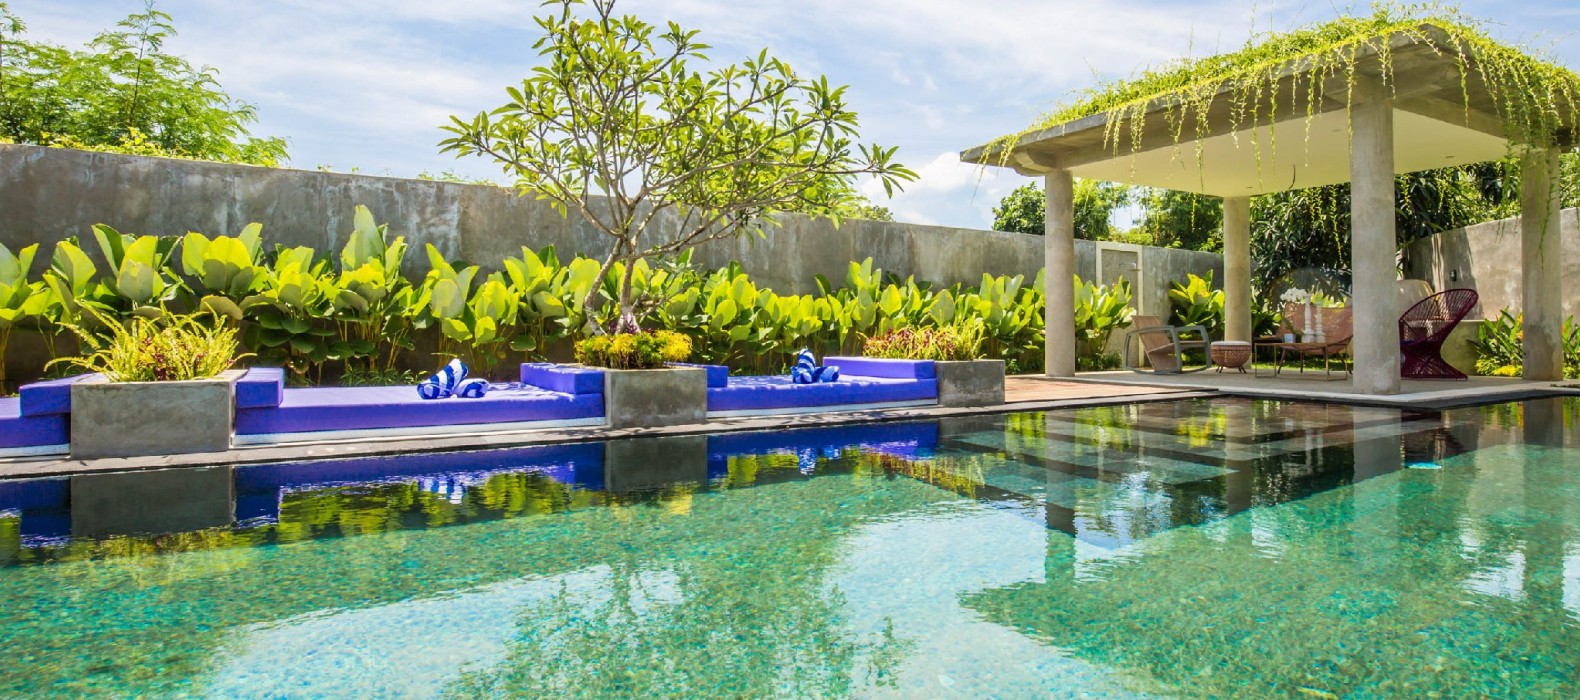 Exterior pool area of Villa Delfino in Bali